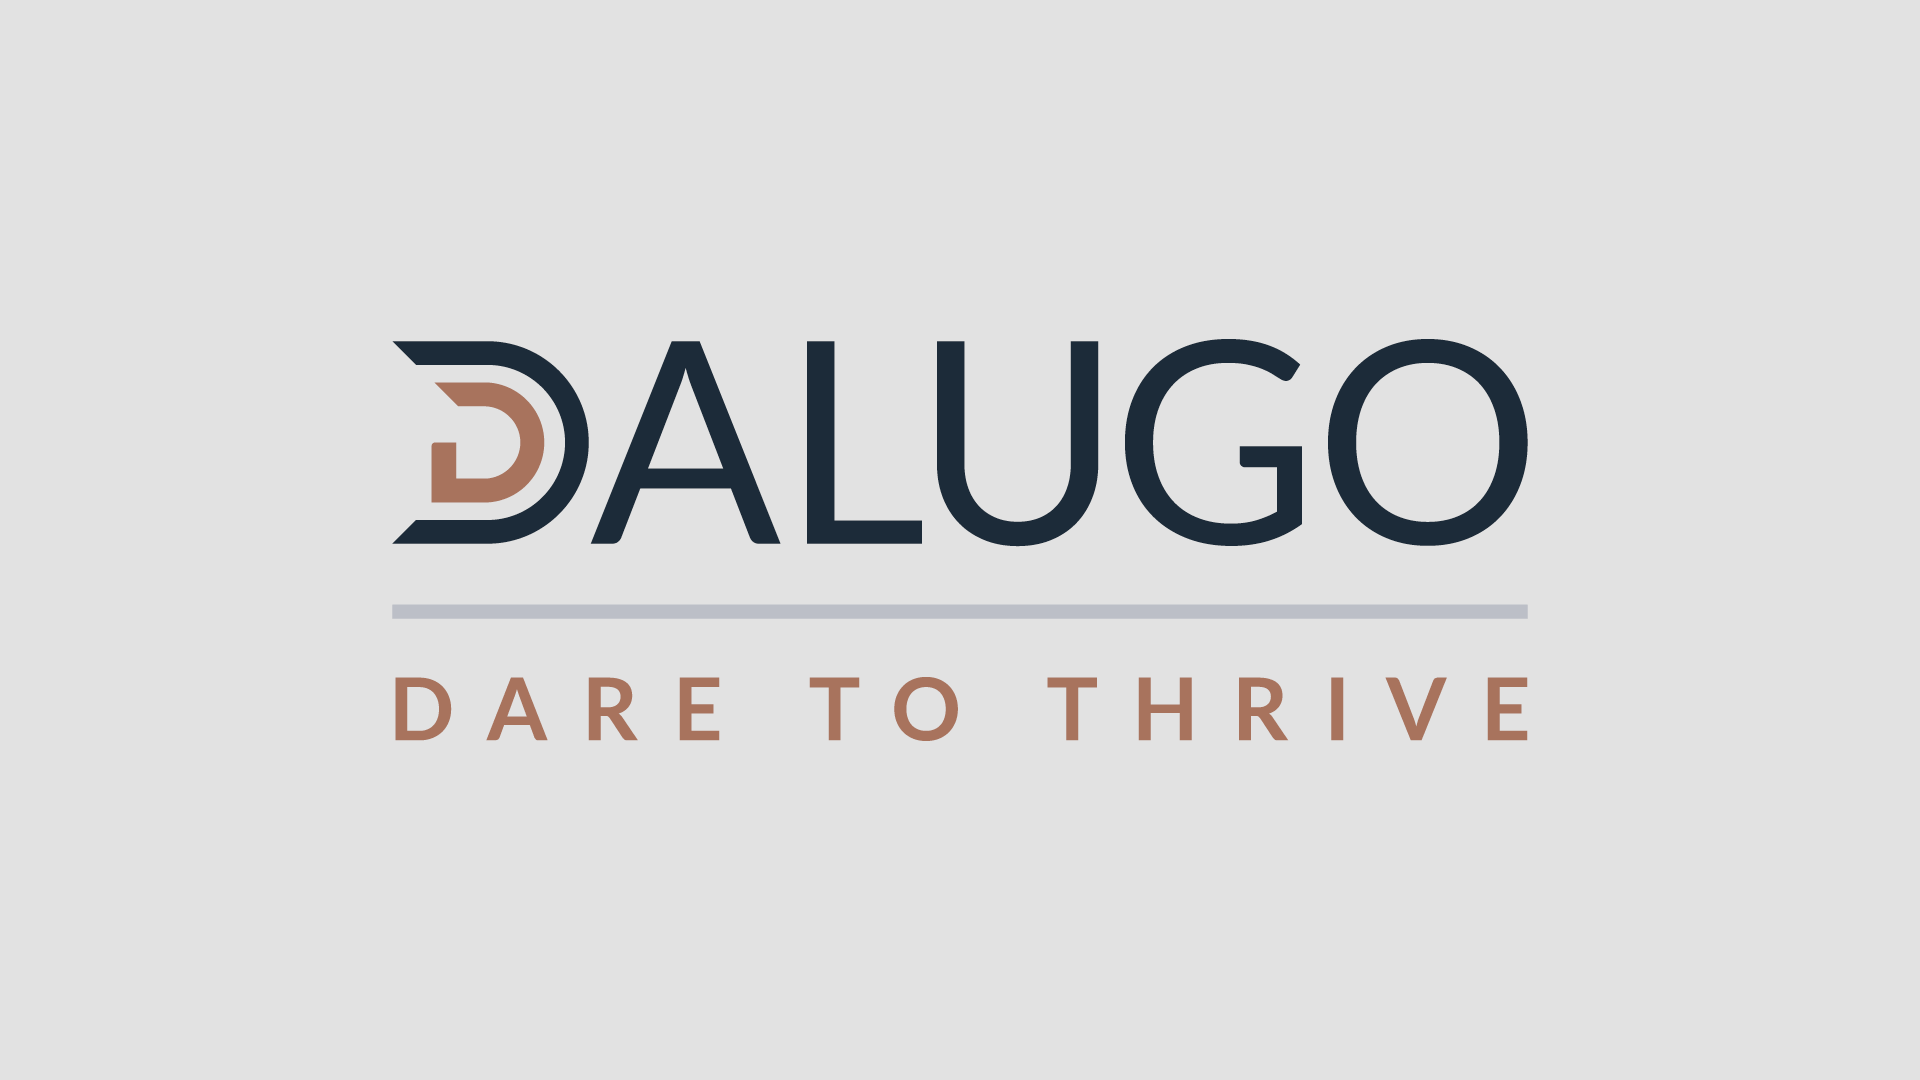 Dalugo – Branding and Marketing - Zadro Agency